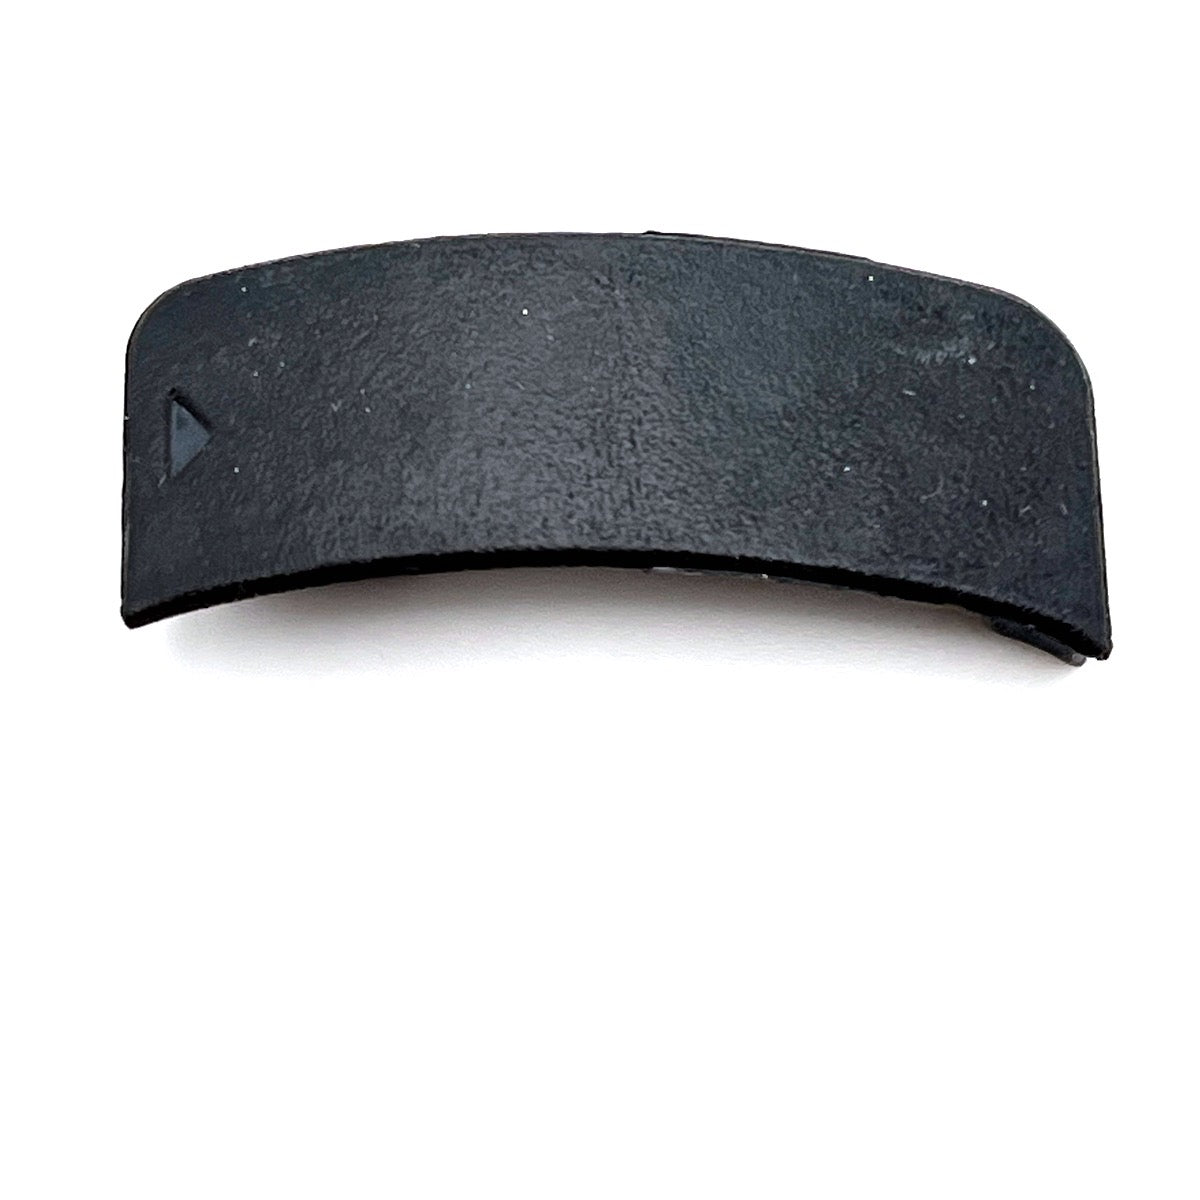 Rubber cap USB Garmin Garmin Astro 320 part repair rubber